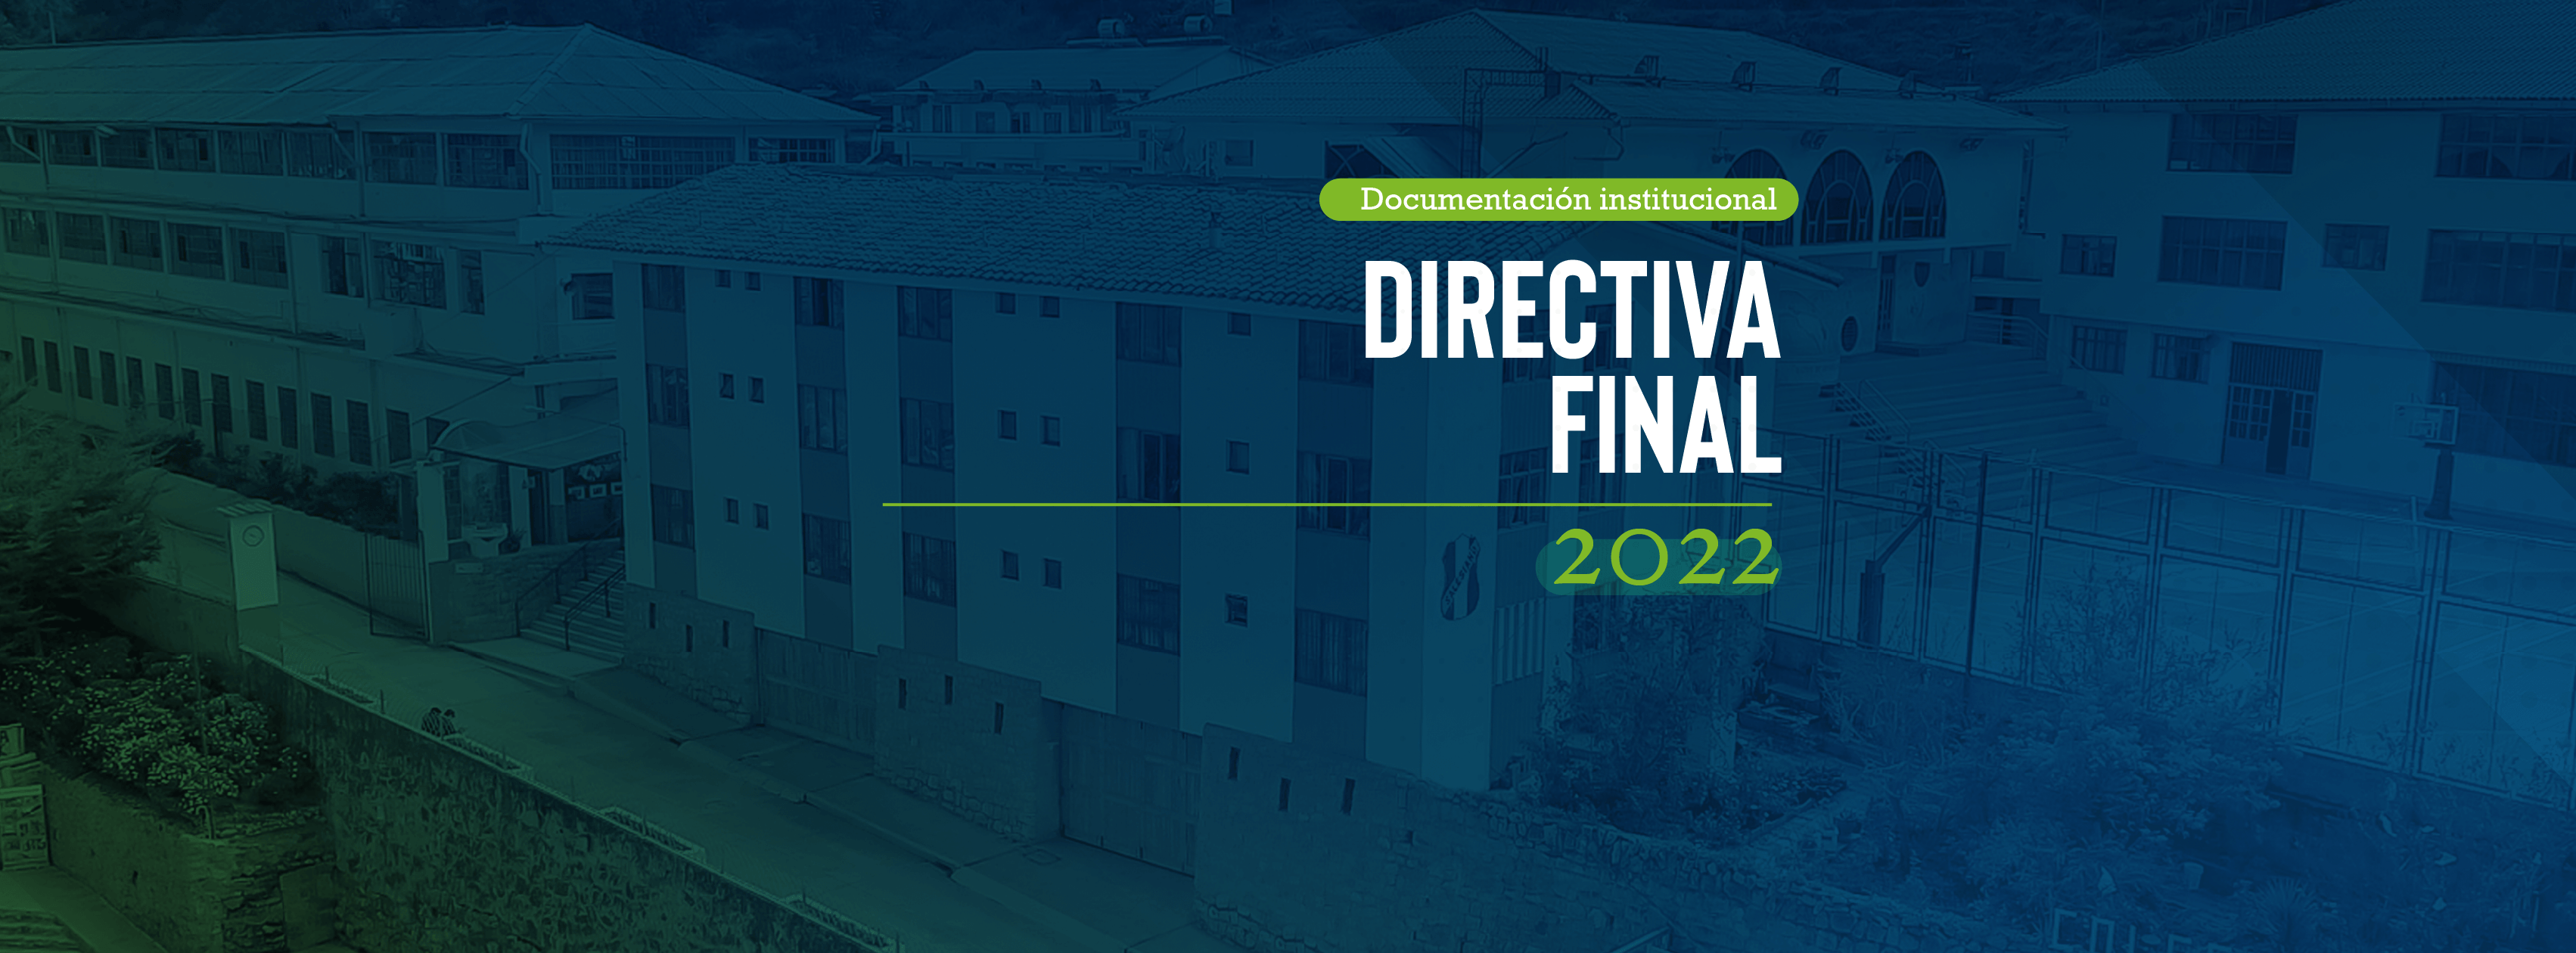 Directiva final 2022